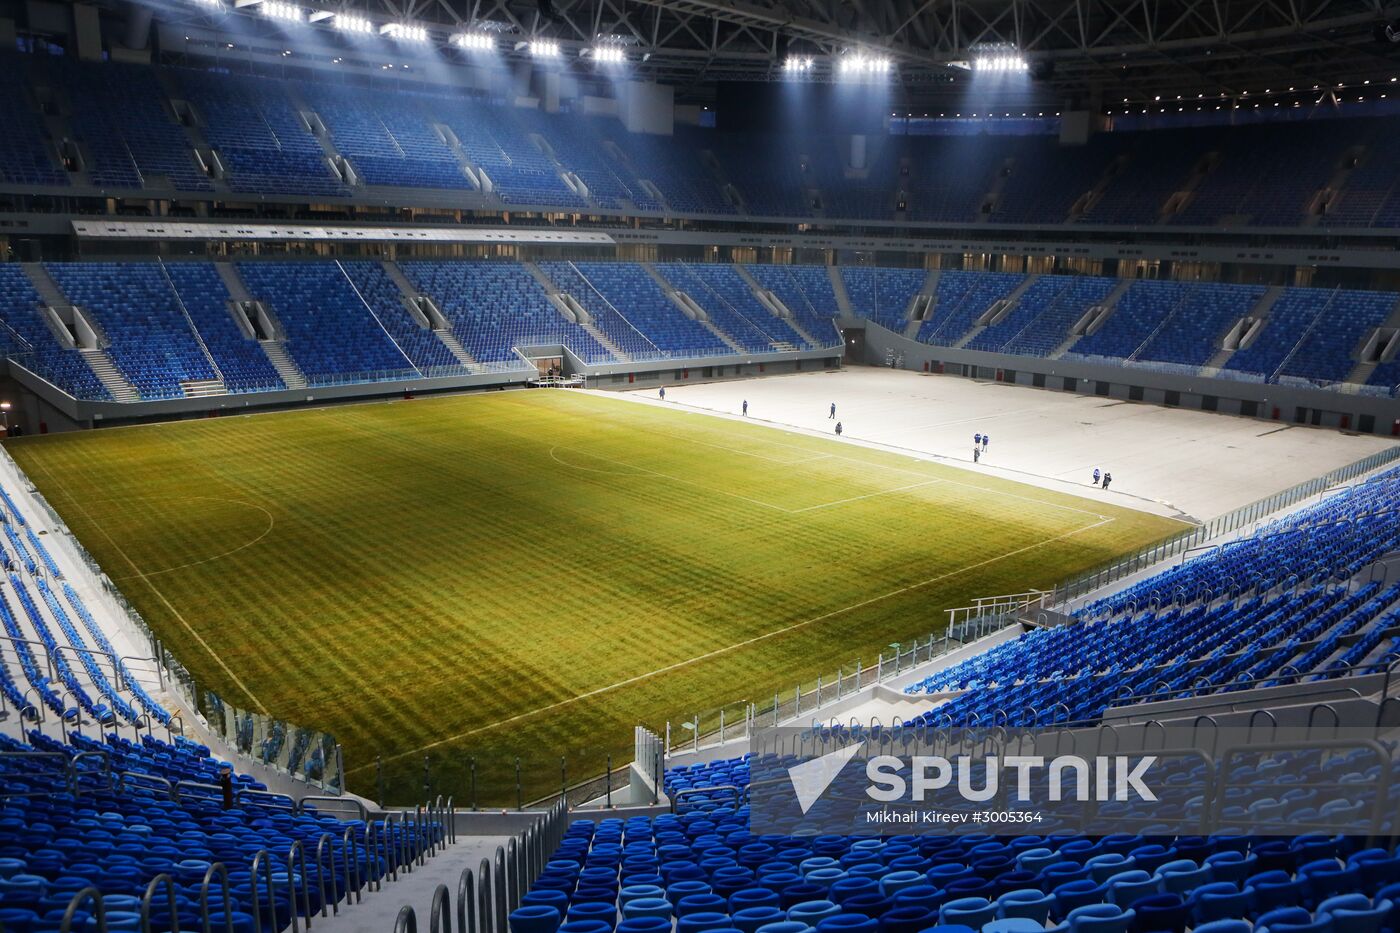 Zenit-Arena stadium in St. Petersburg